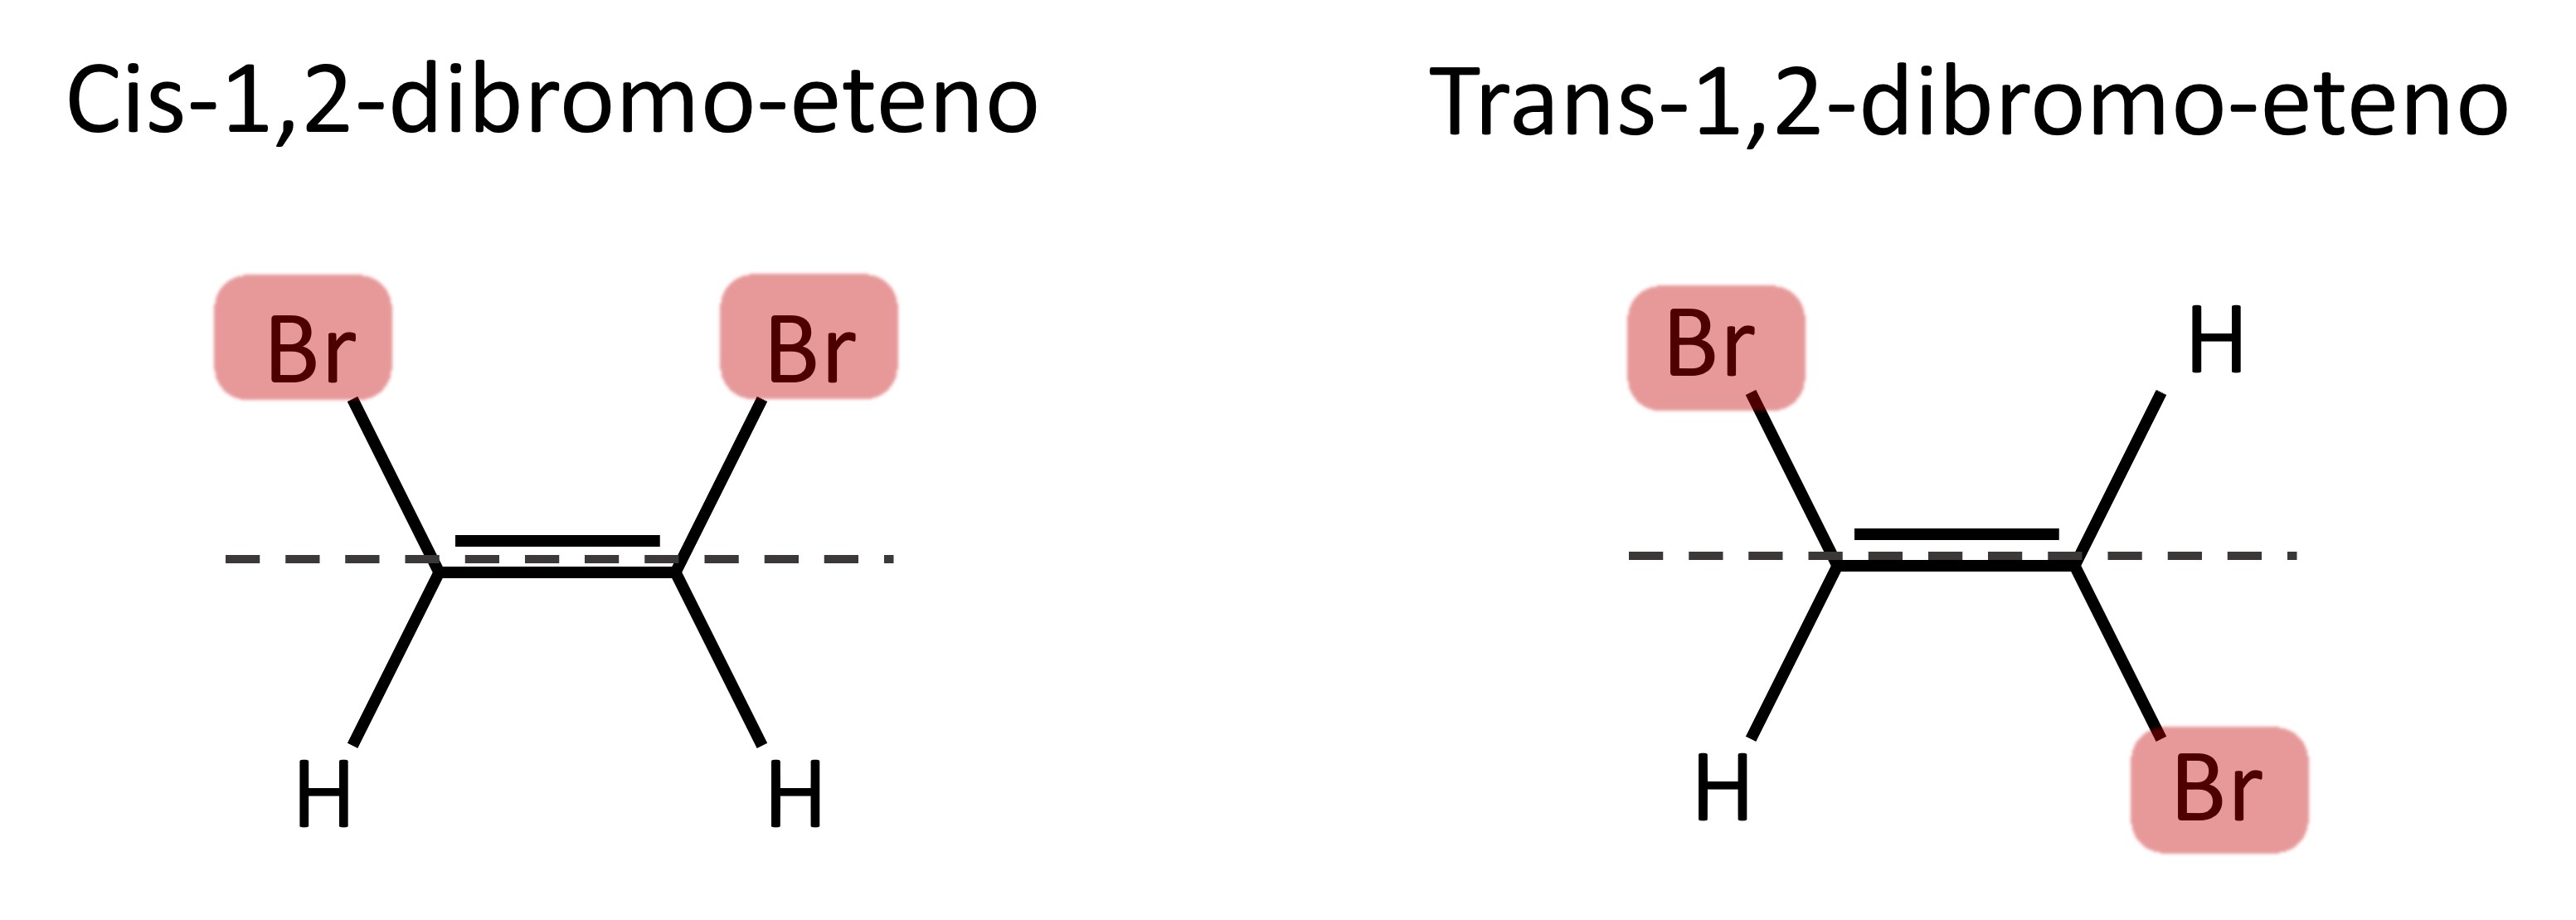 Estruturas e nomes dos isômeros geométricos cis-1,2-dibromo-eteno e trans-1,2-dibromo-eteno.